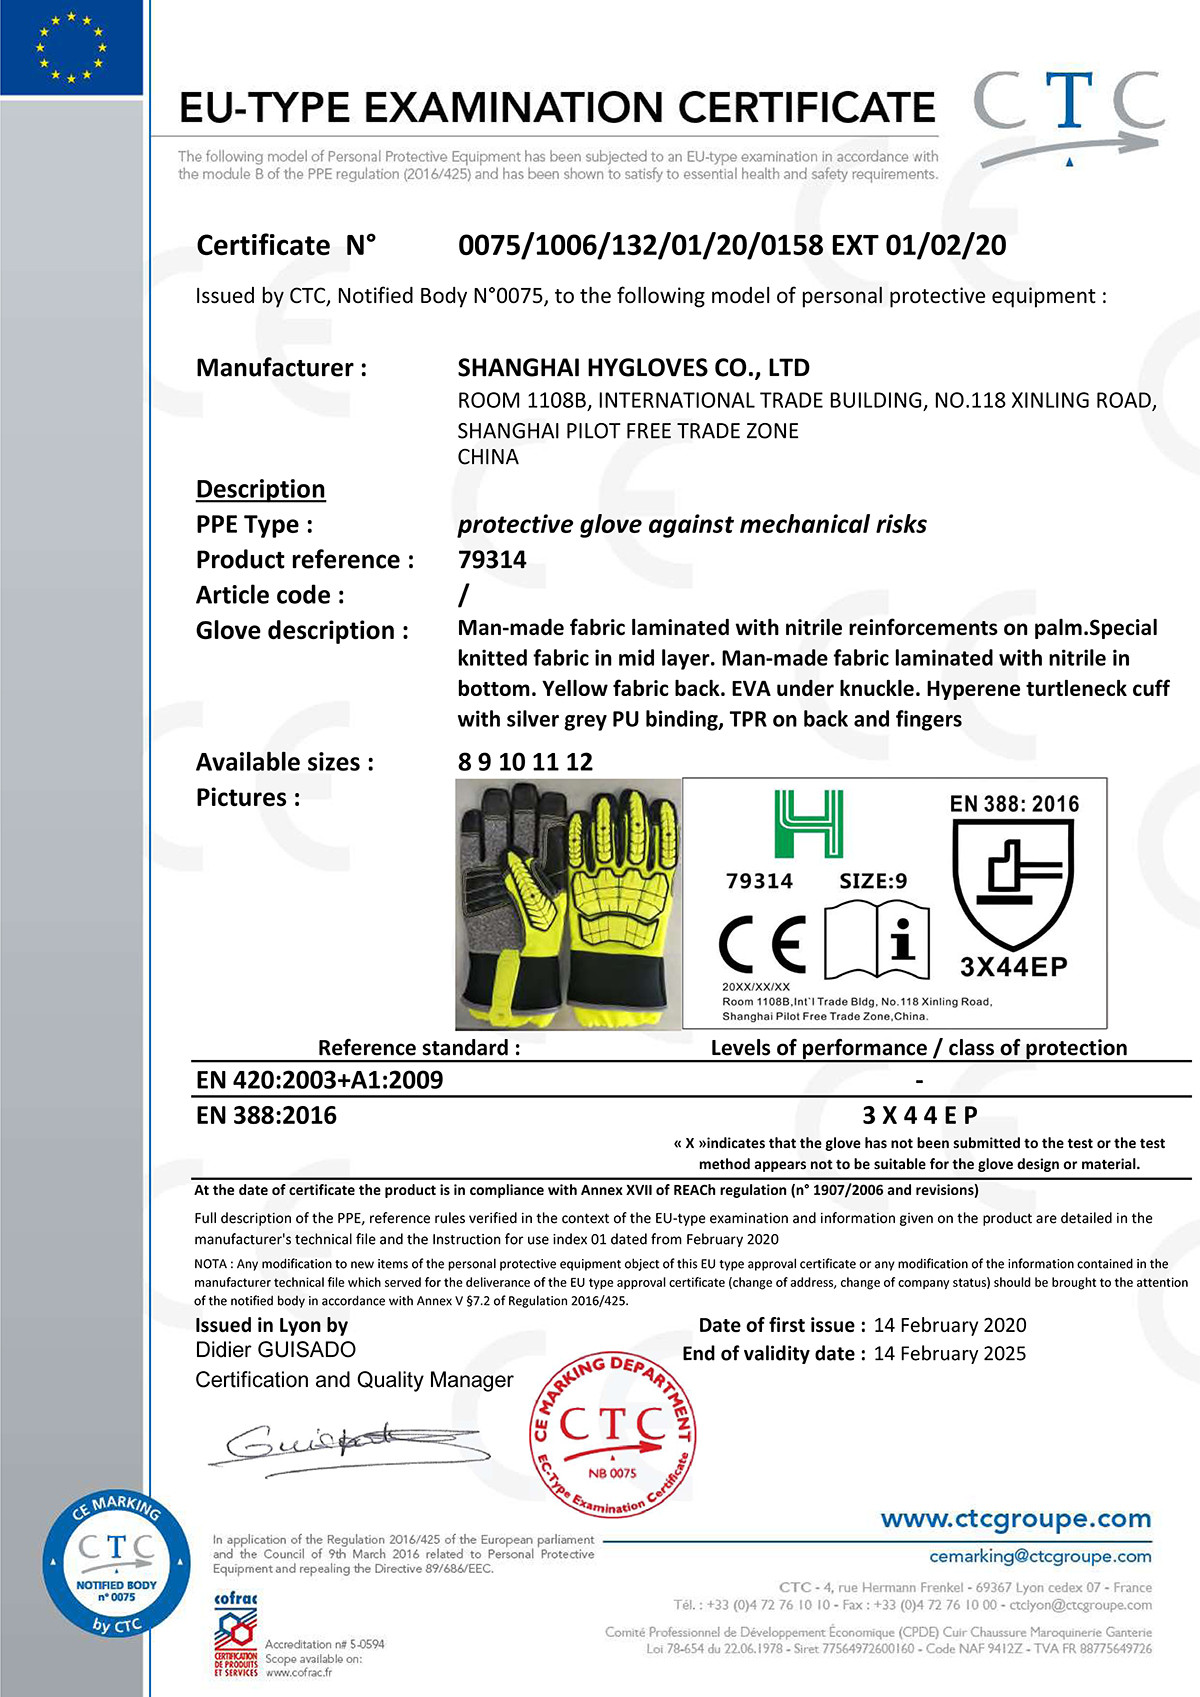 Shanghai Hygloves Co., Ltd Certifications